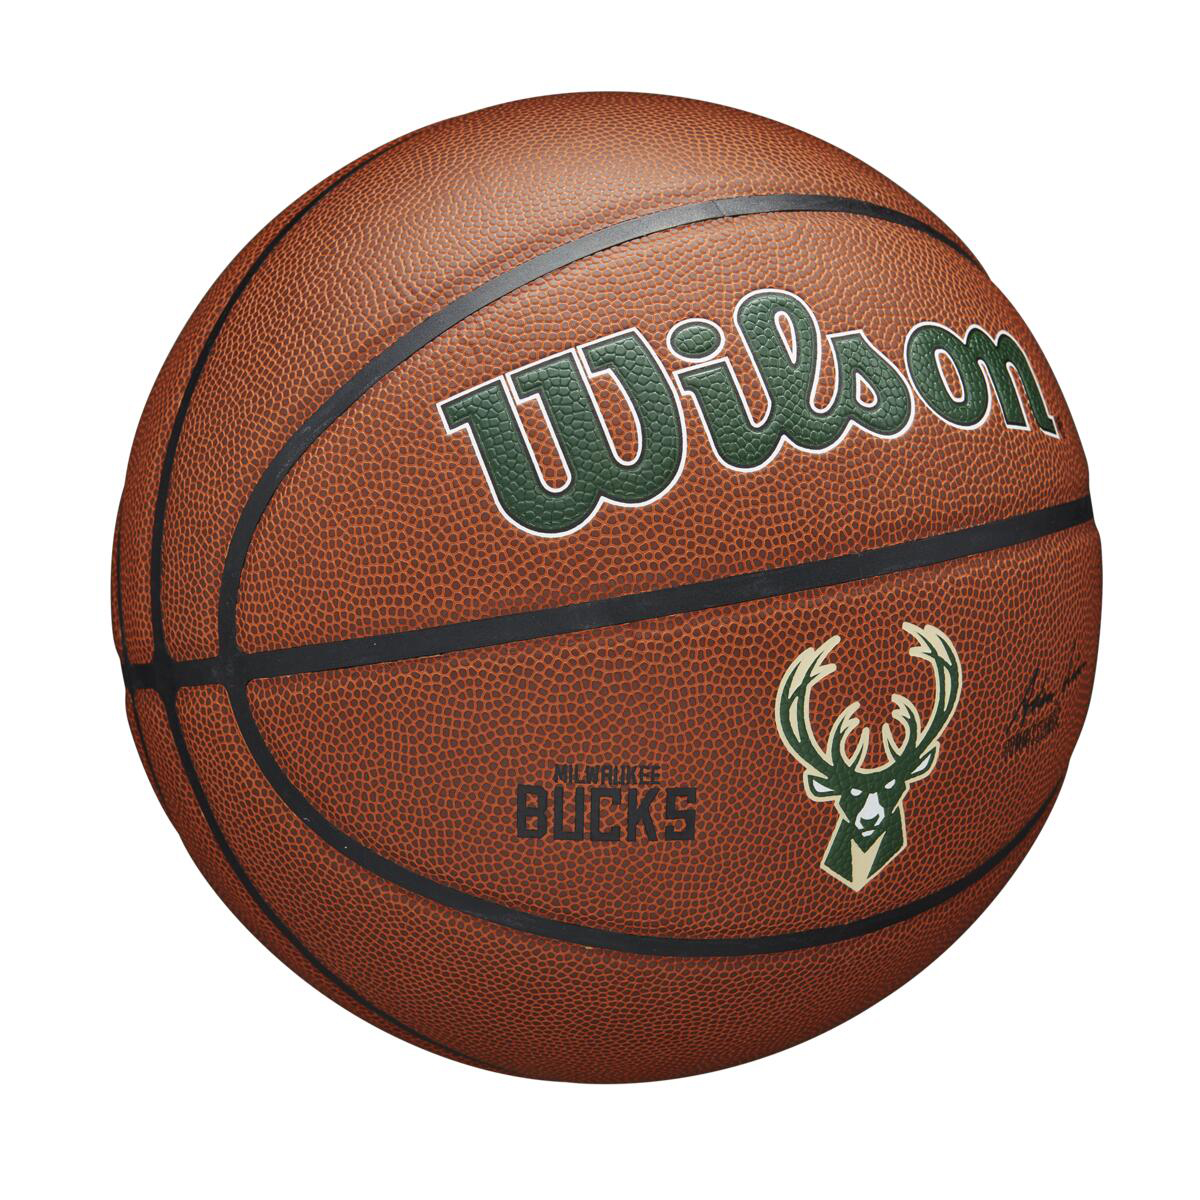 WILSON NBA COMPOSITE BUCKS 7 BROWN